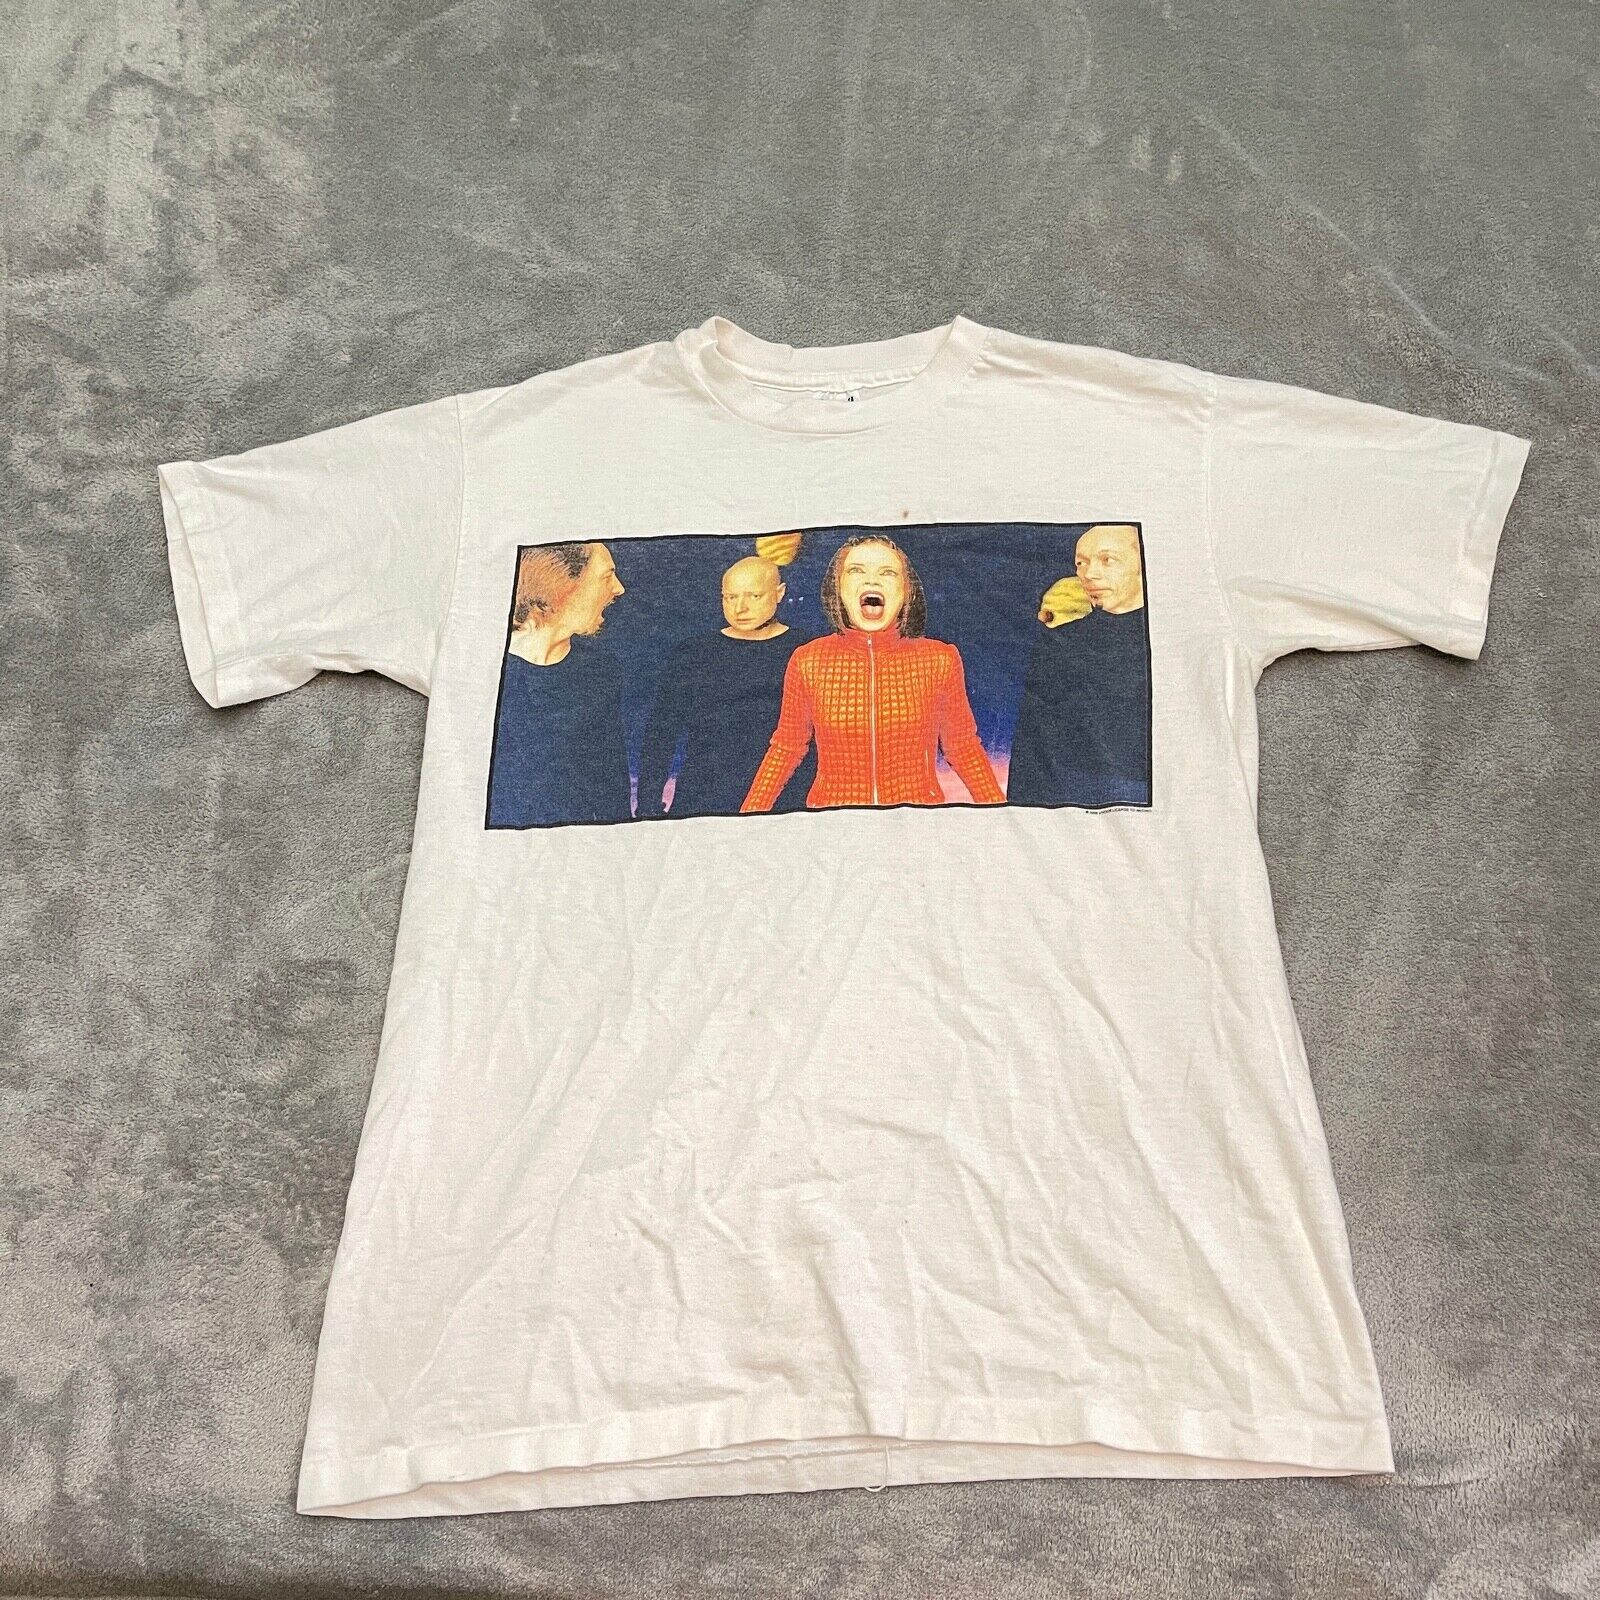 Christ dangerous Restraint VTG 90s 1996 Garbage Band Tour Music Grunge Print T-Shirt Medium Has Stains  | eBay